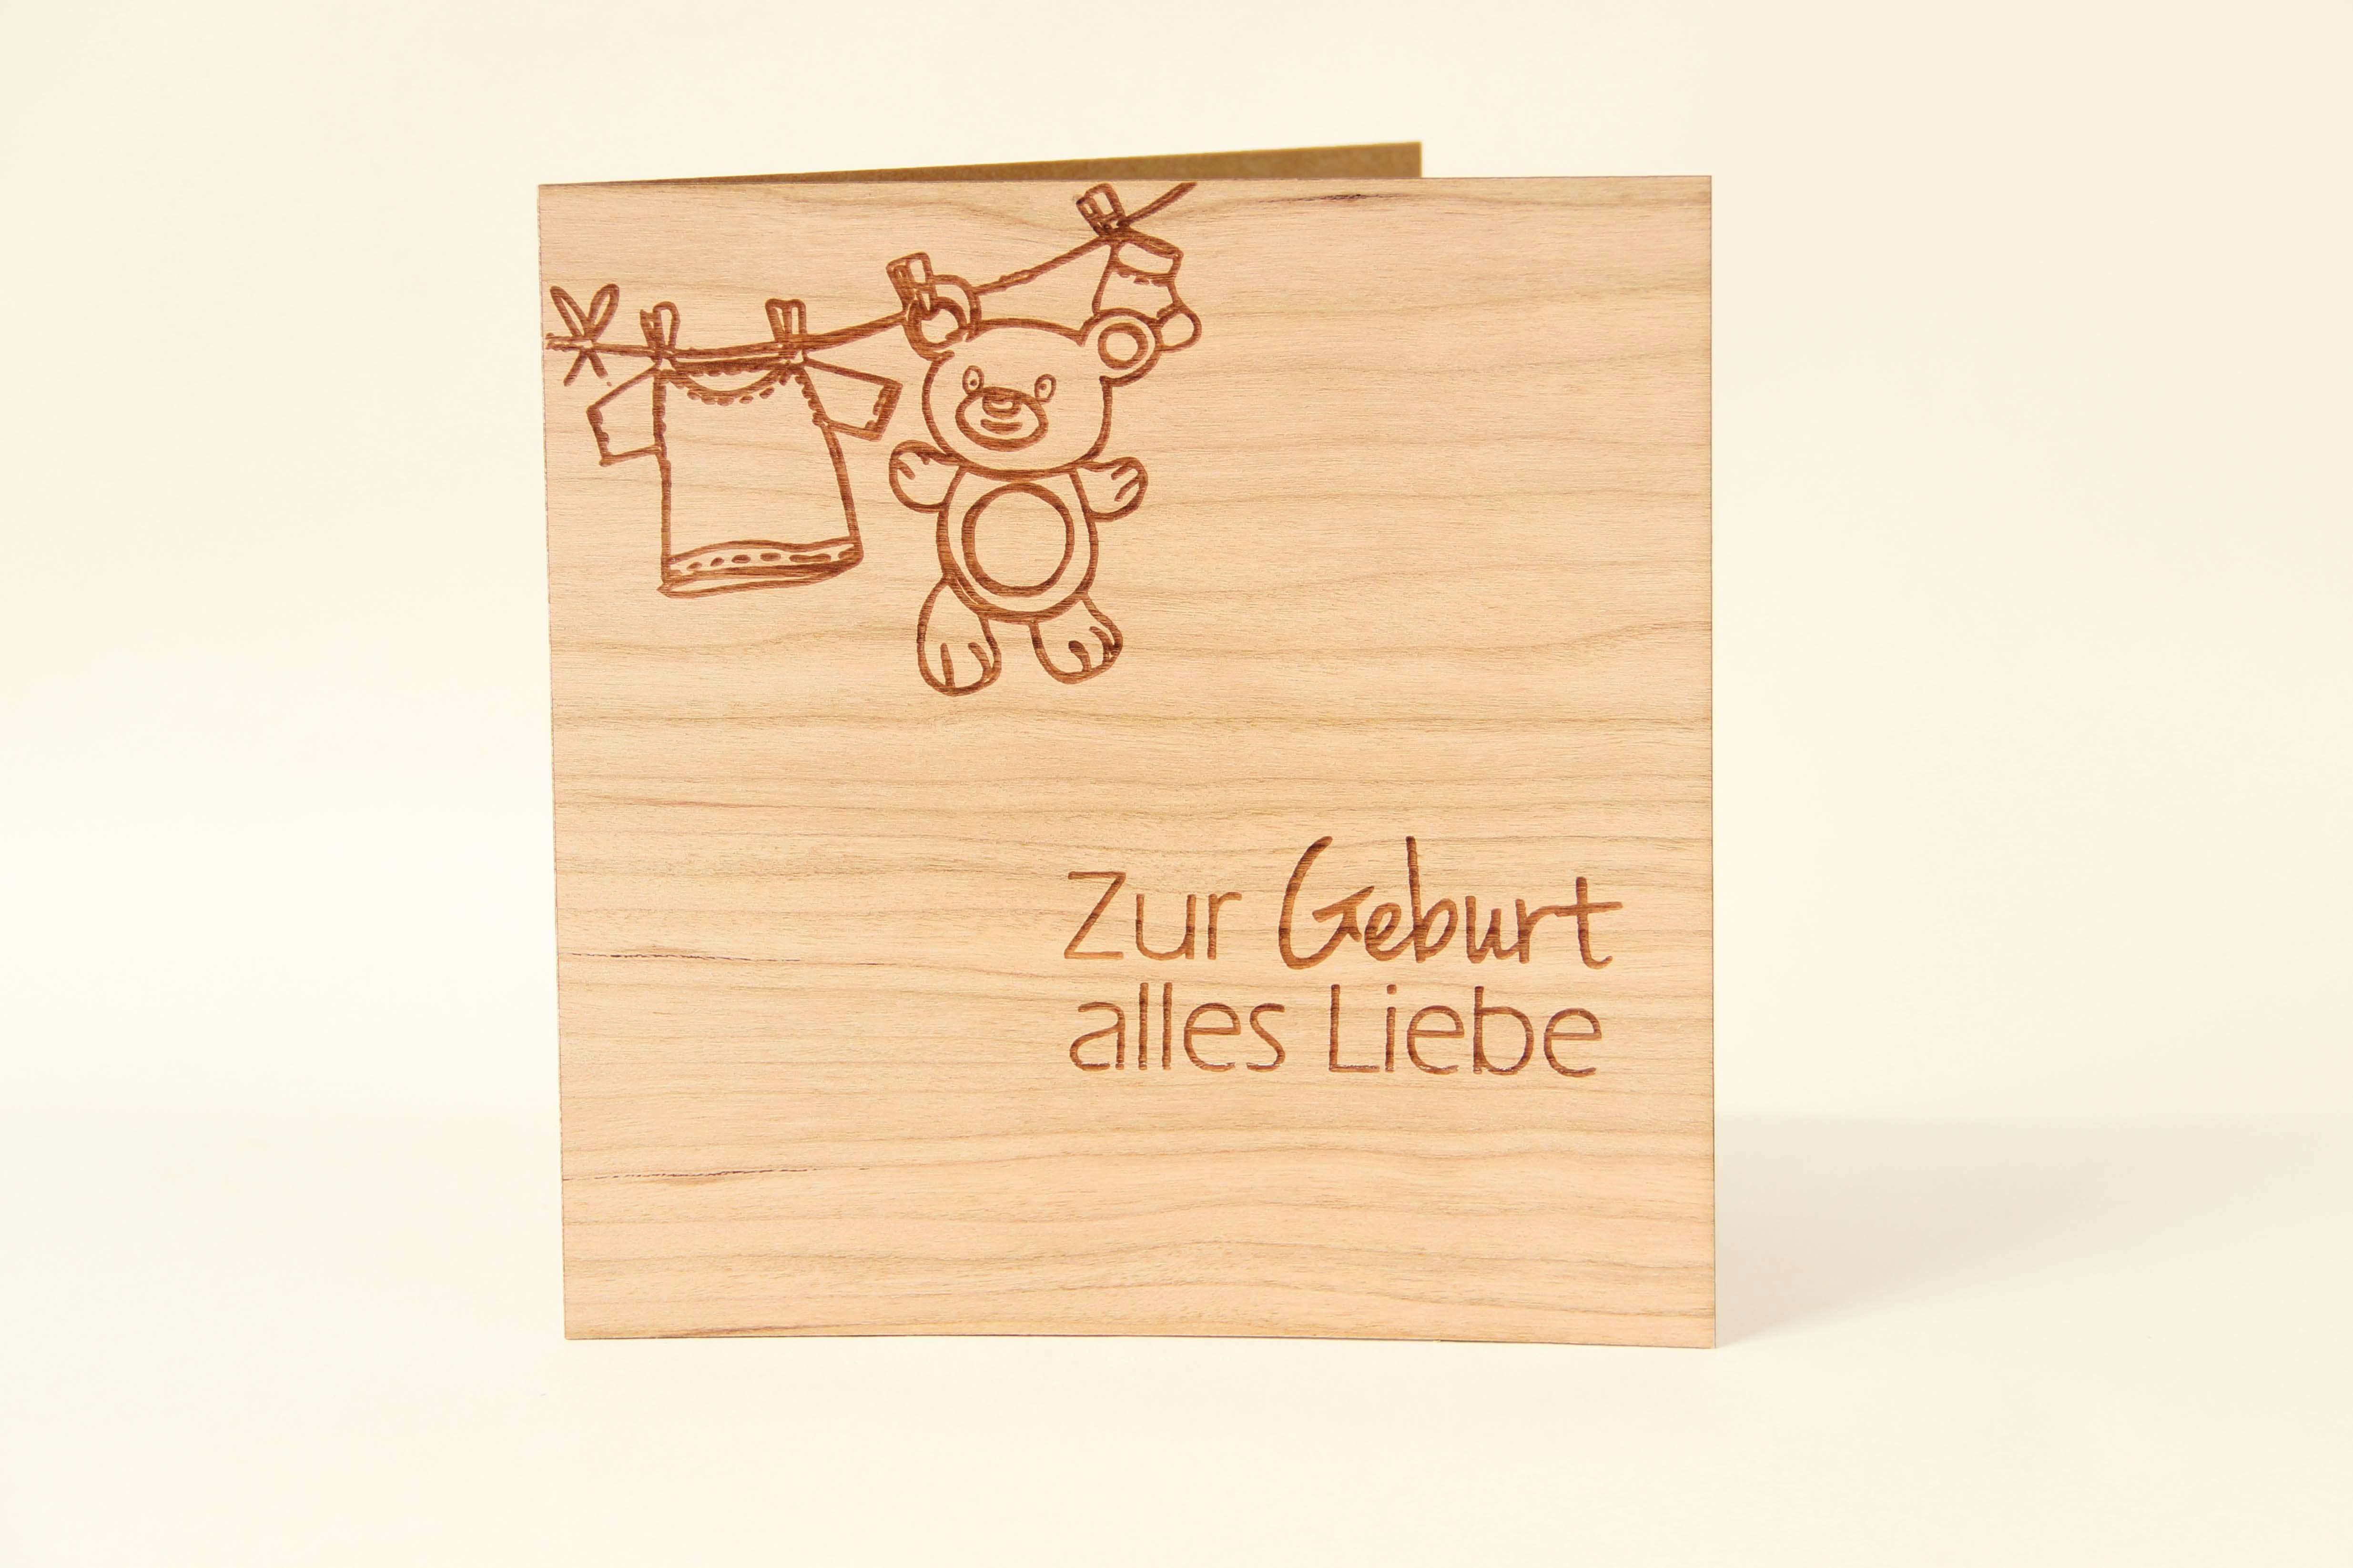 Holzgrusskarten - Holzgrusskarte Geburt 102 "Zur Geburt alles Liebe", Teddybär, Kirsche